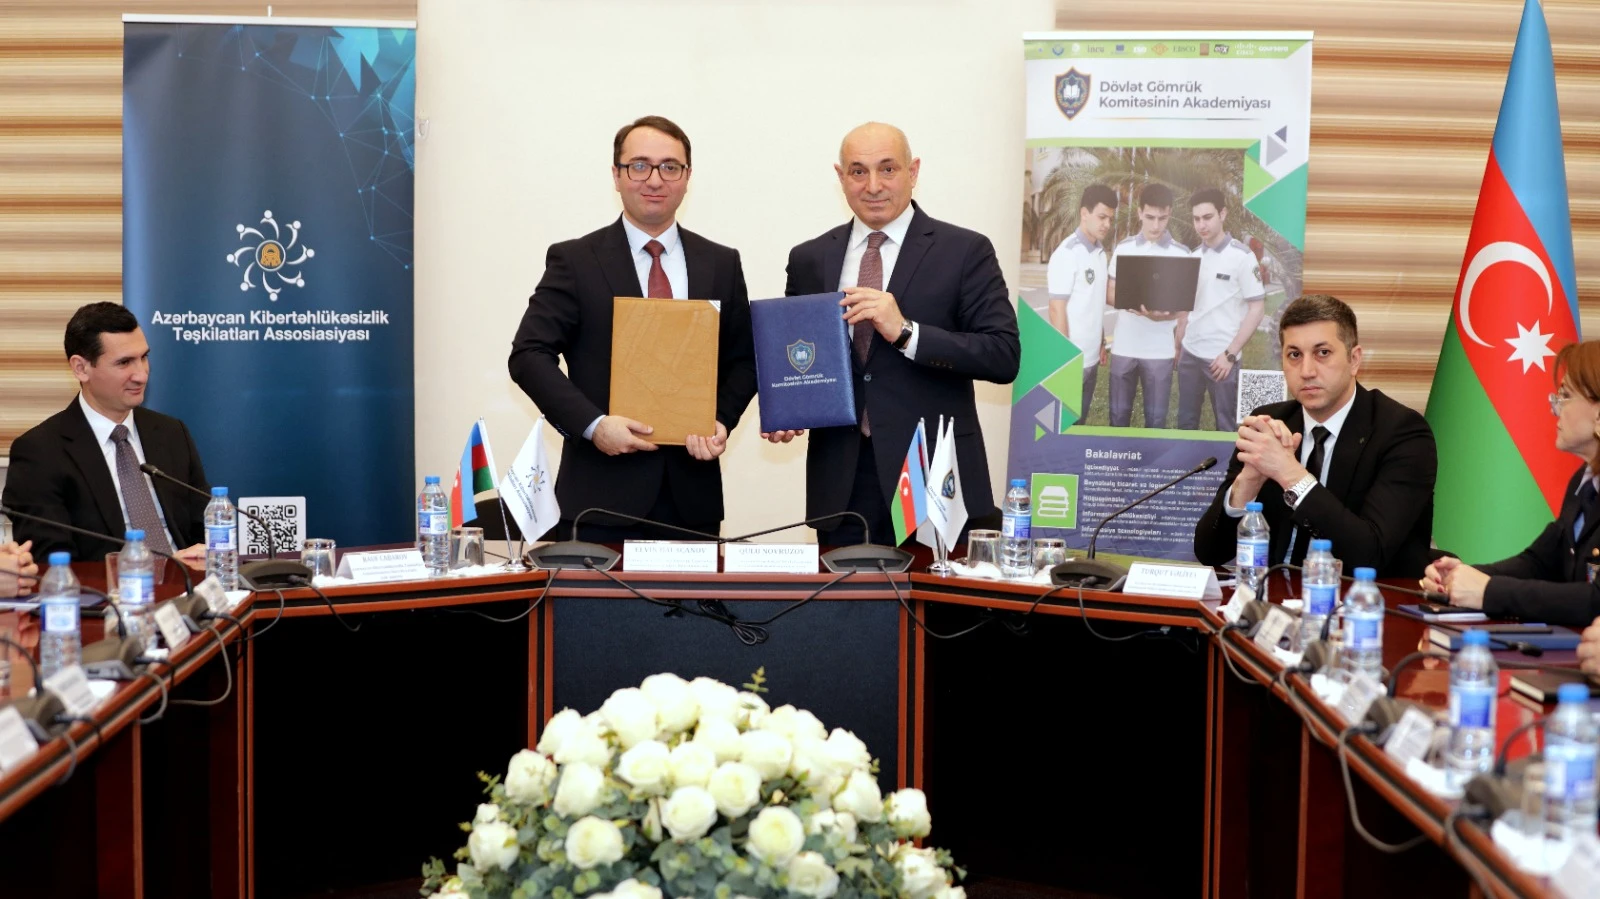 A Memorandum of Understanding was signed between DGKA and AKTA - 8